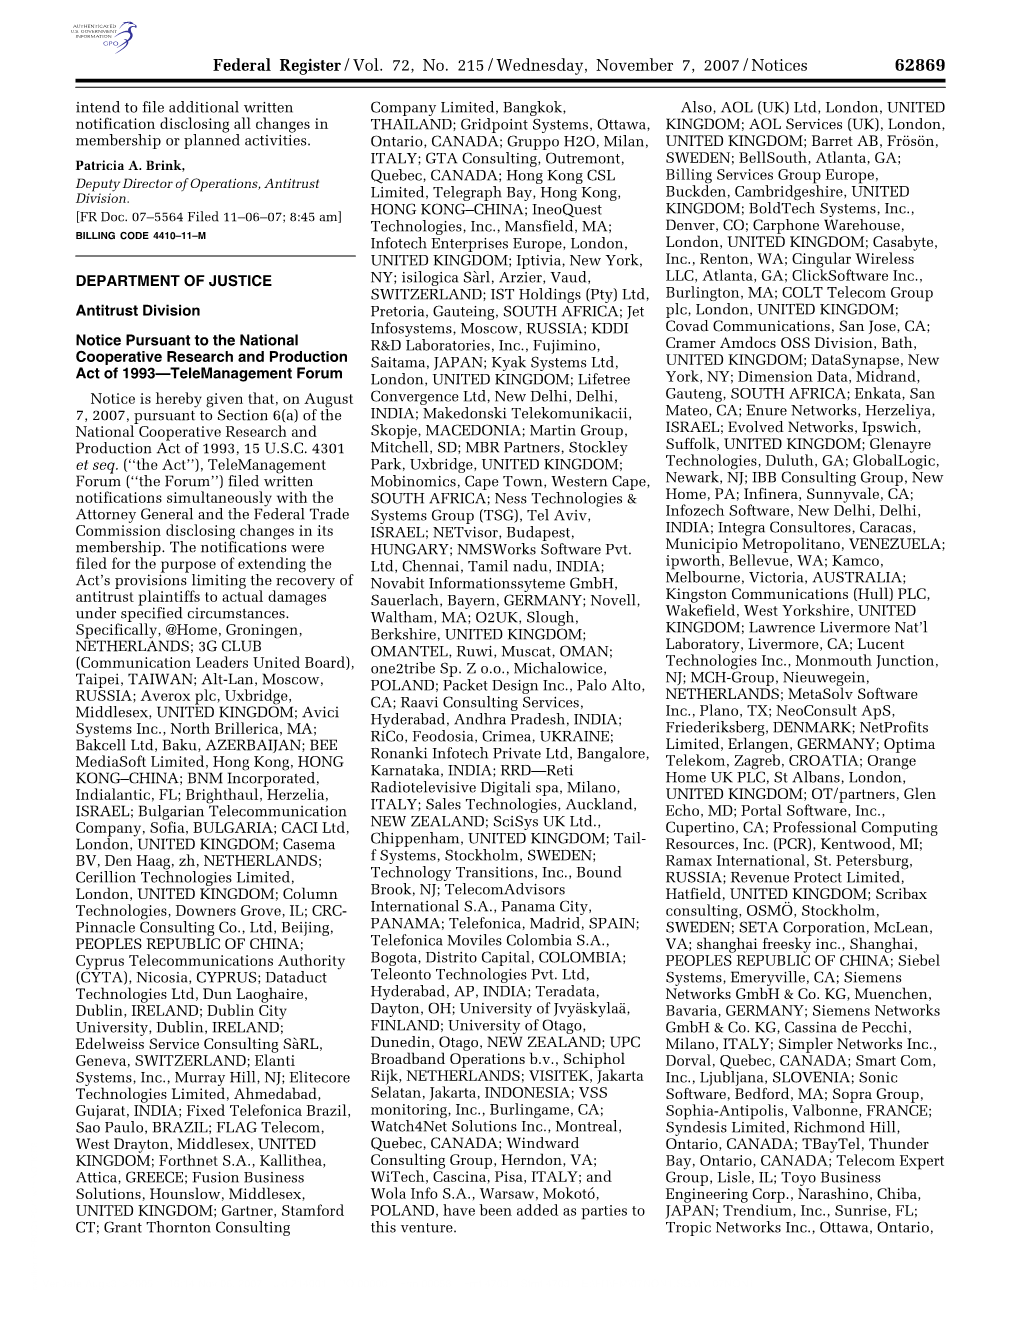 Federal Register/Vol. 72, No. 215/Wednesday, November 7, 2007/Notices